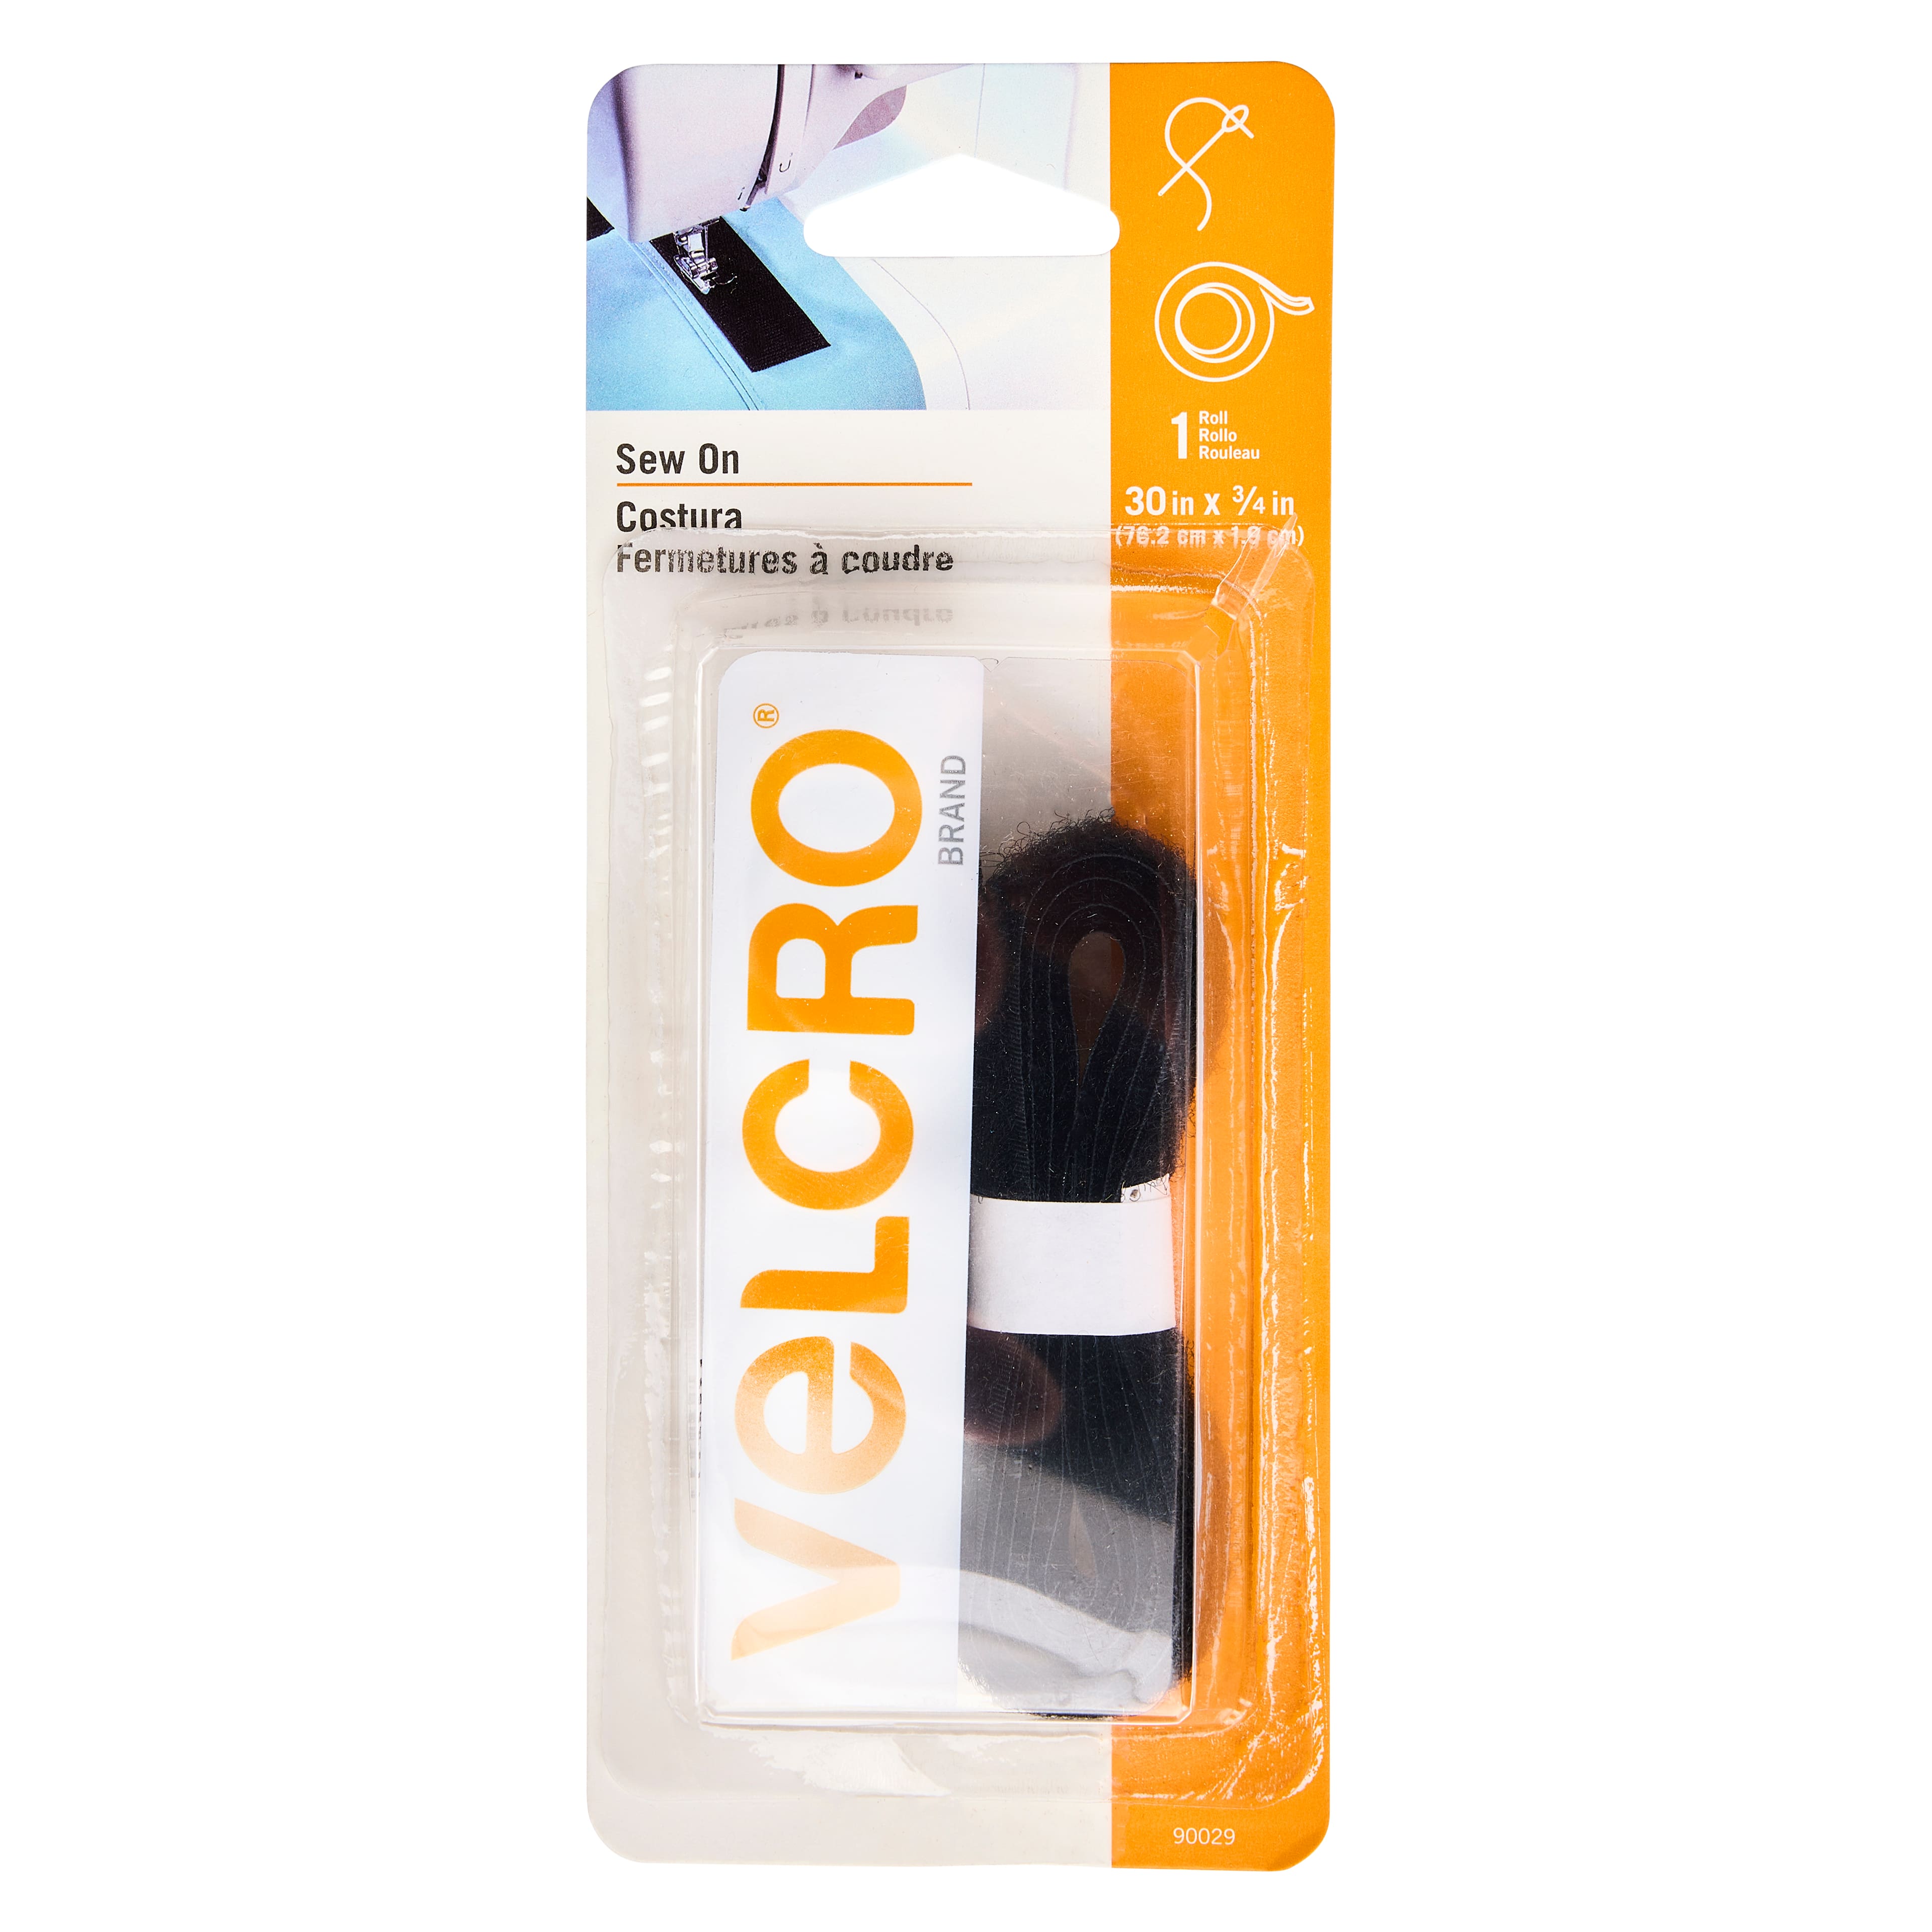 VELCRO Brand Sew On Hook Only Tape Black